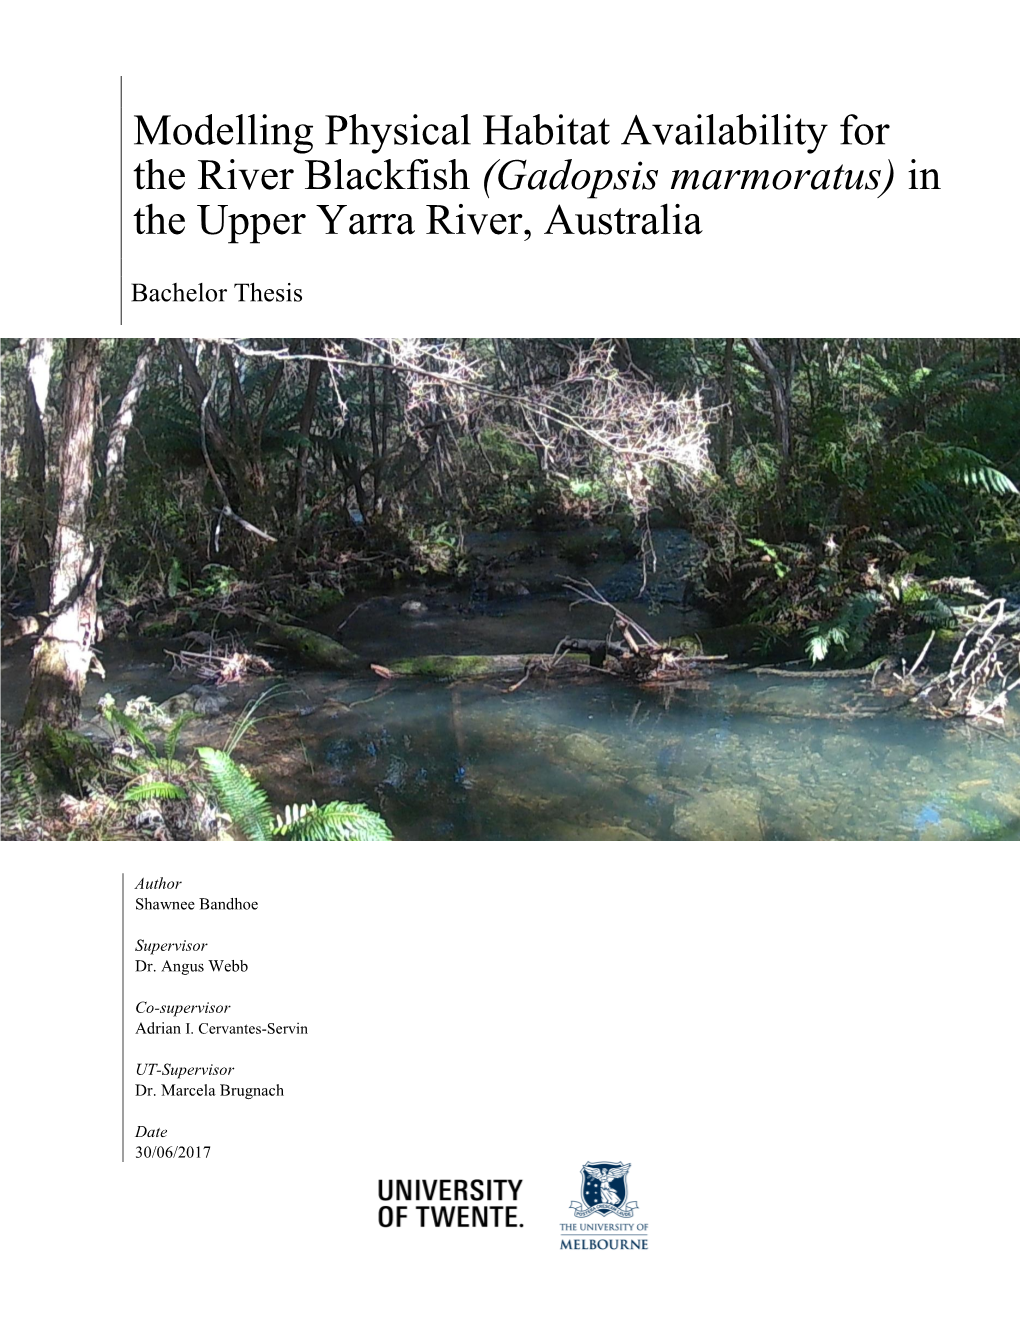 Physical Habitat Simulation of the River Blackfish (Gadopsis